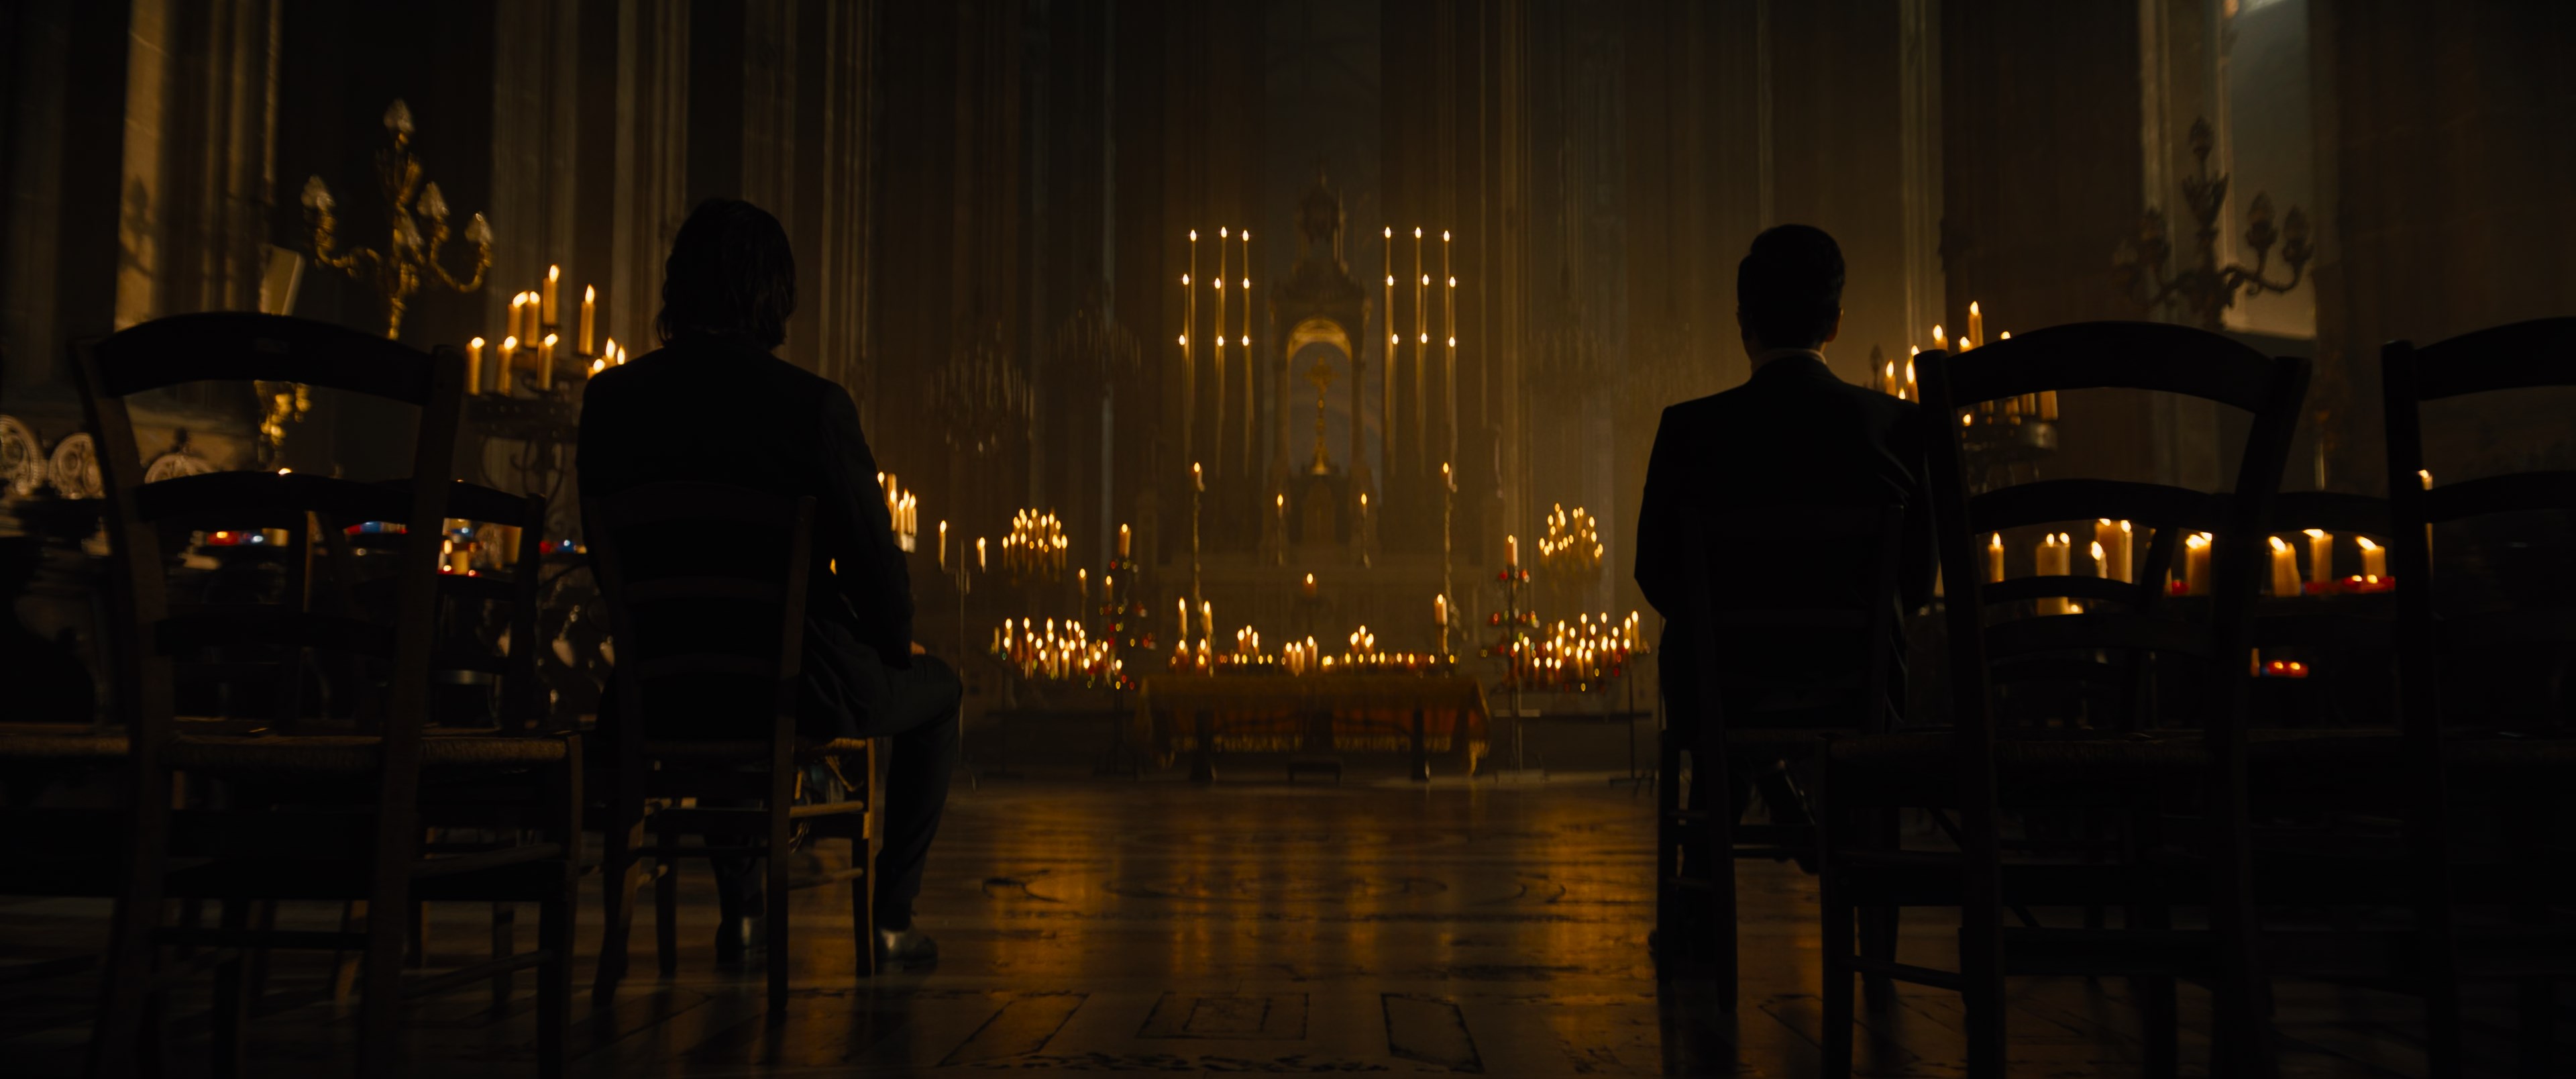 John Wick John Wick Chapter 4 Donnie Yen Keanu Reeves Church Movies Film Stills Chair Candles Interi 3840x1608